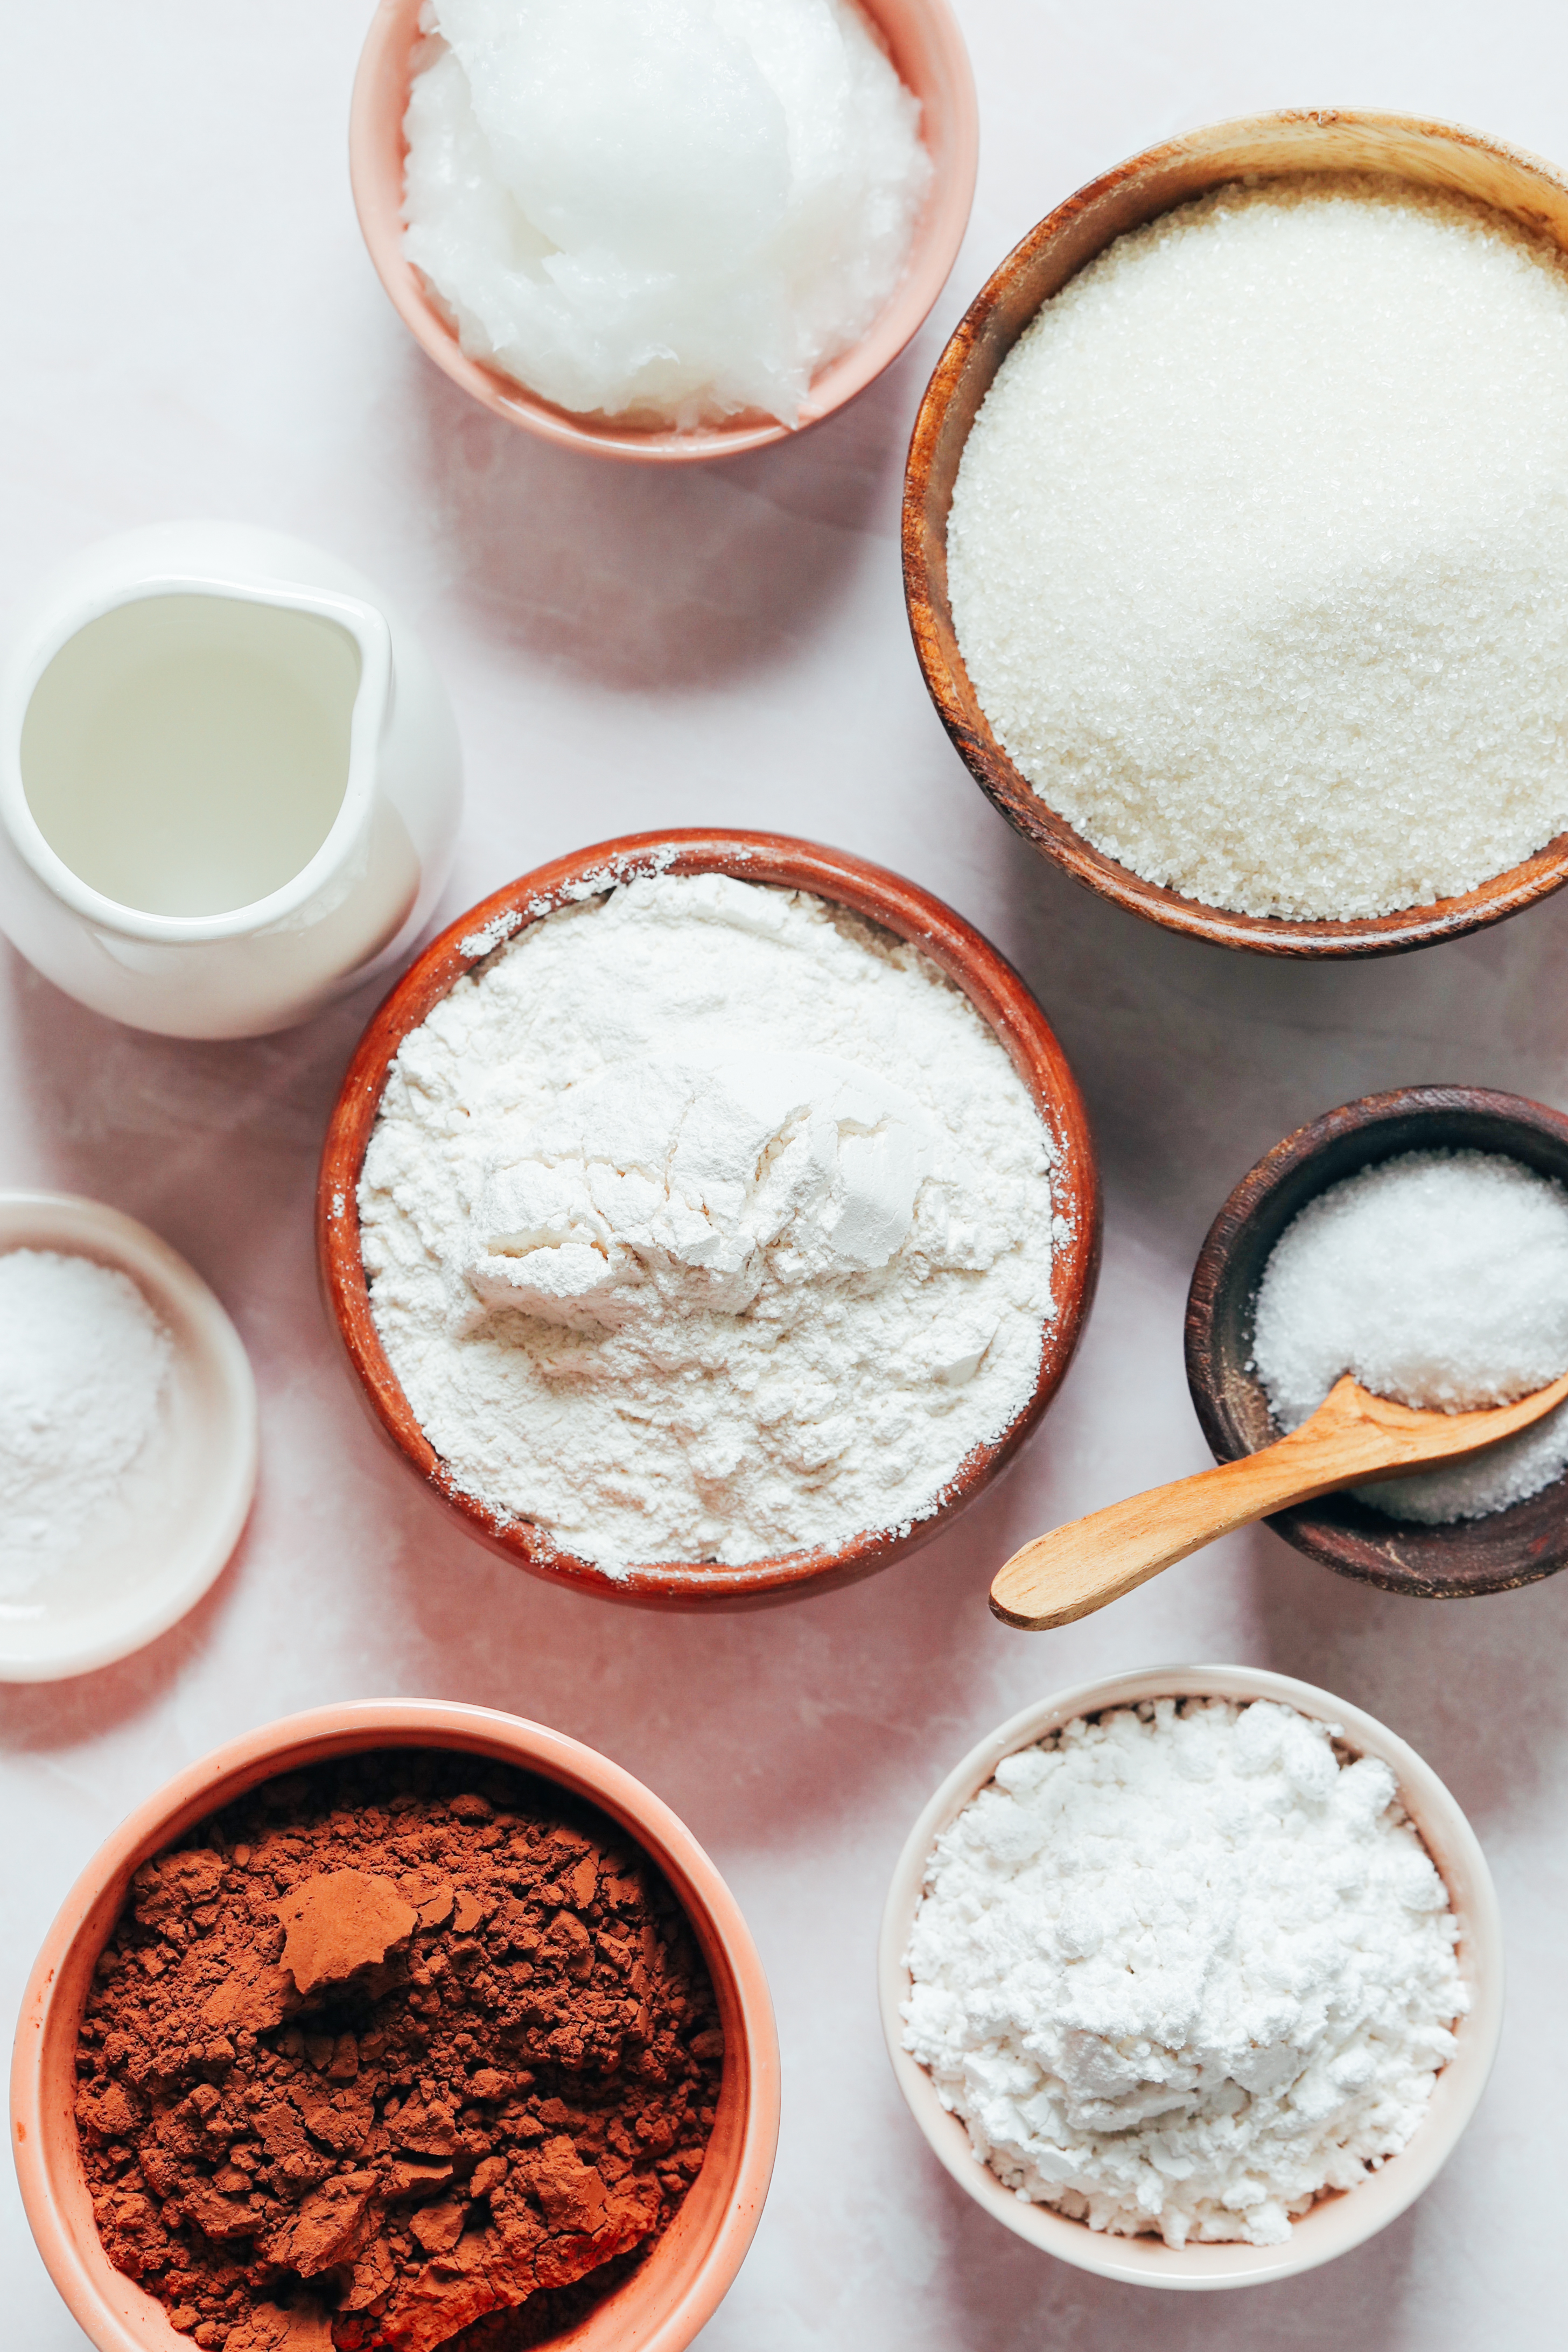 Coconut oil, cane sugar, cassava flour, salt, powdered sugar, cocoa powder, baking powder and water